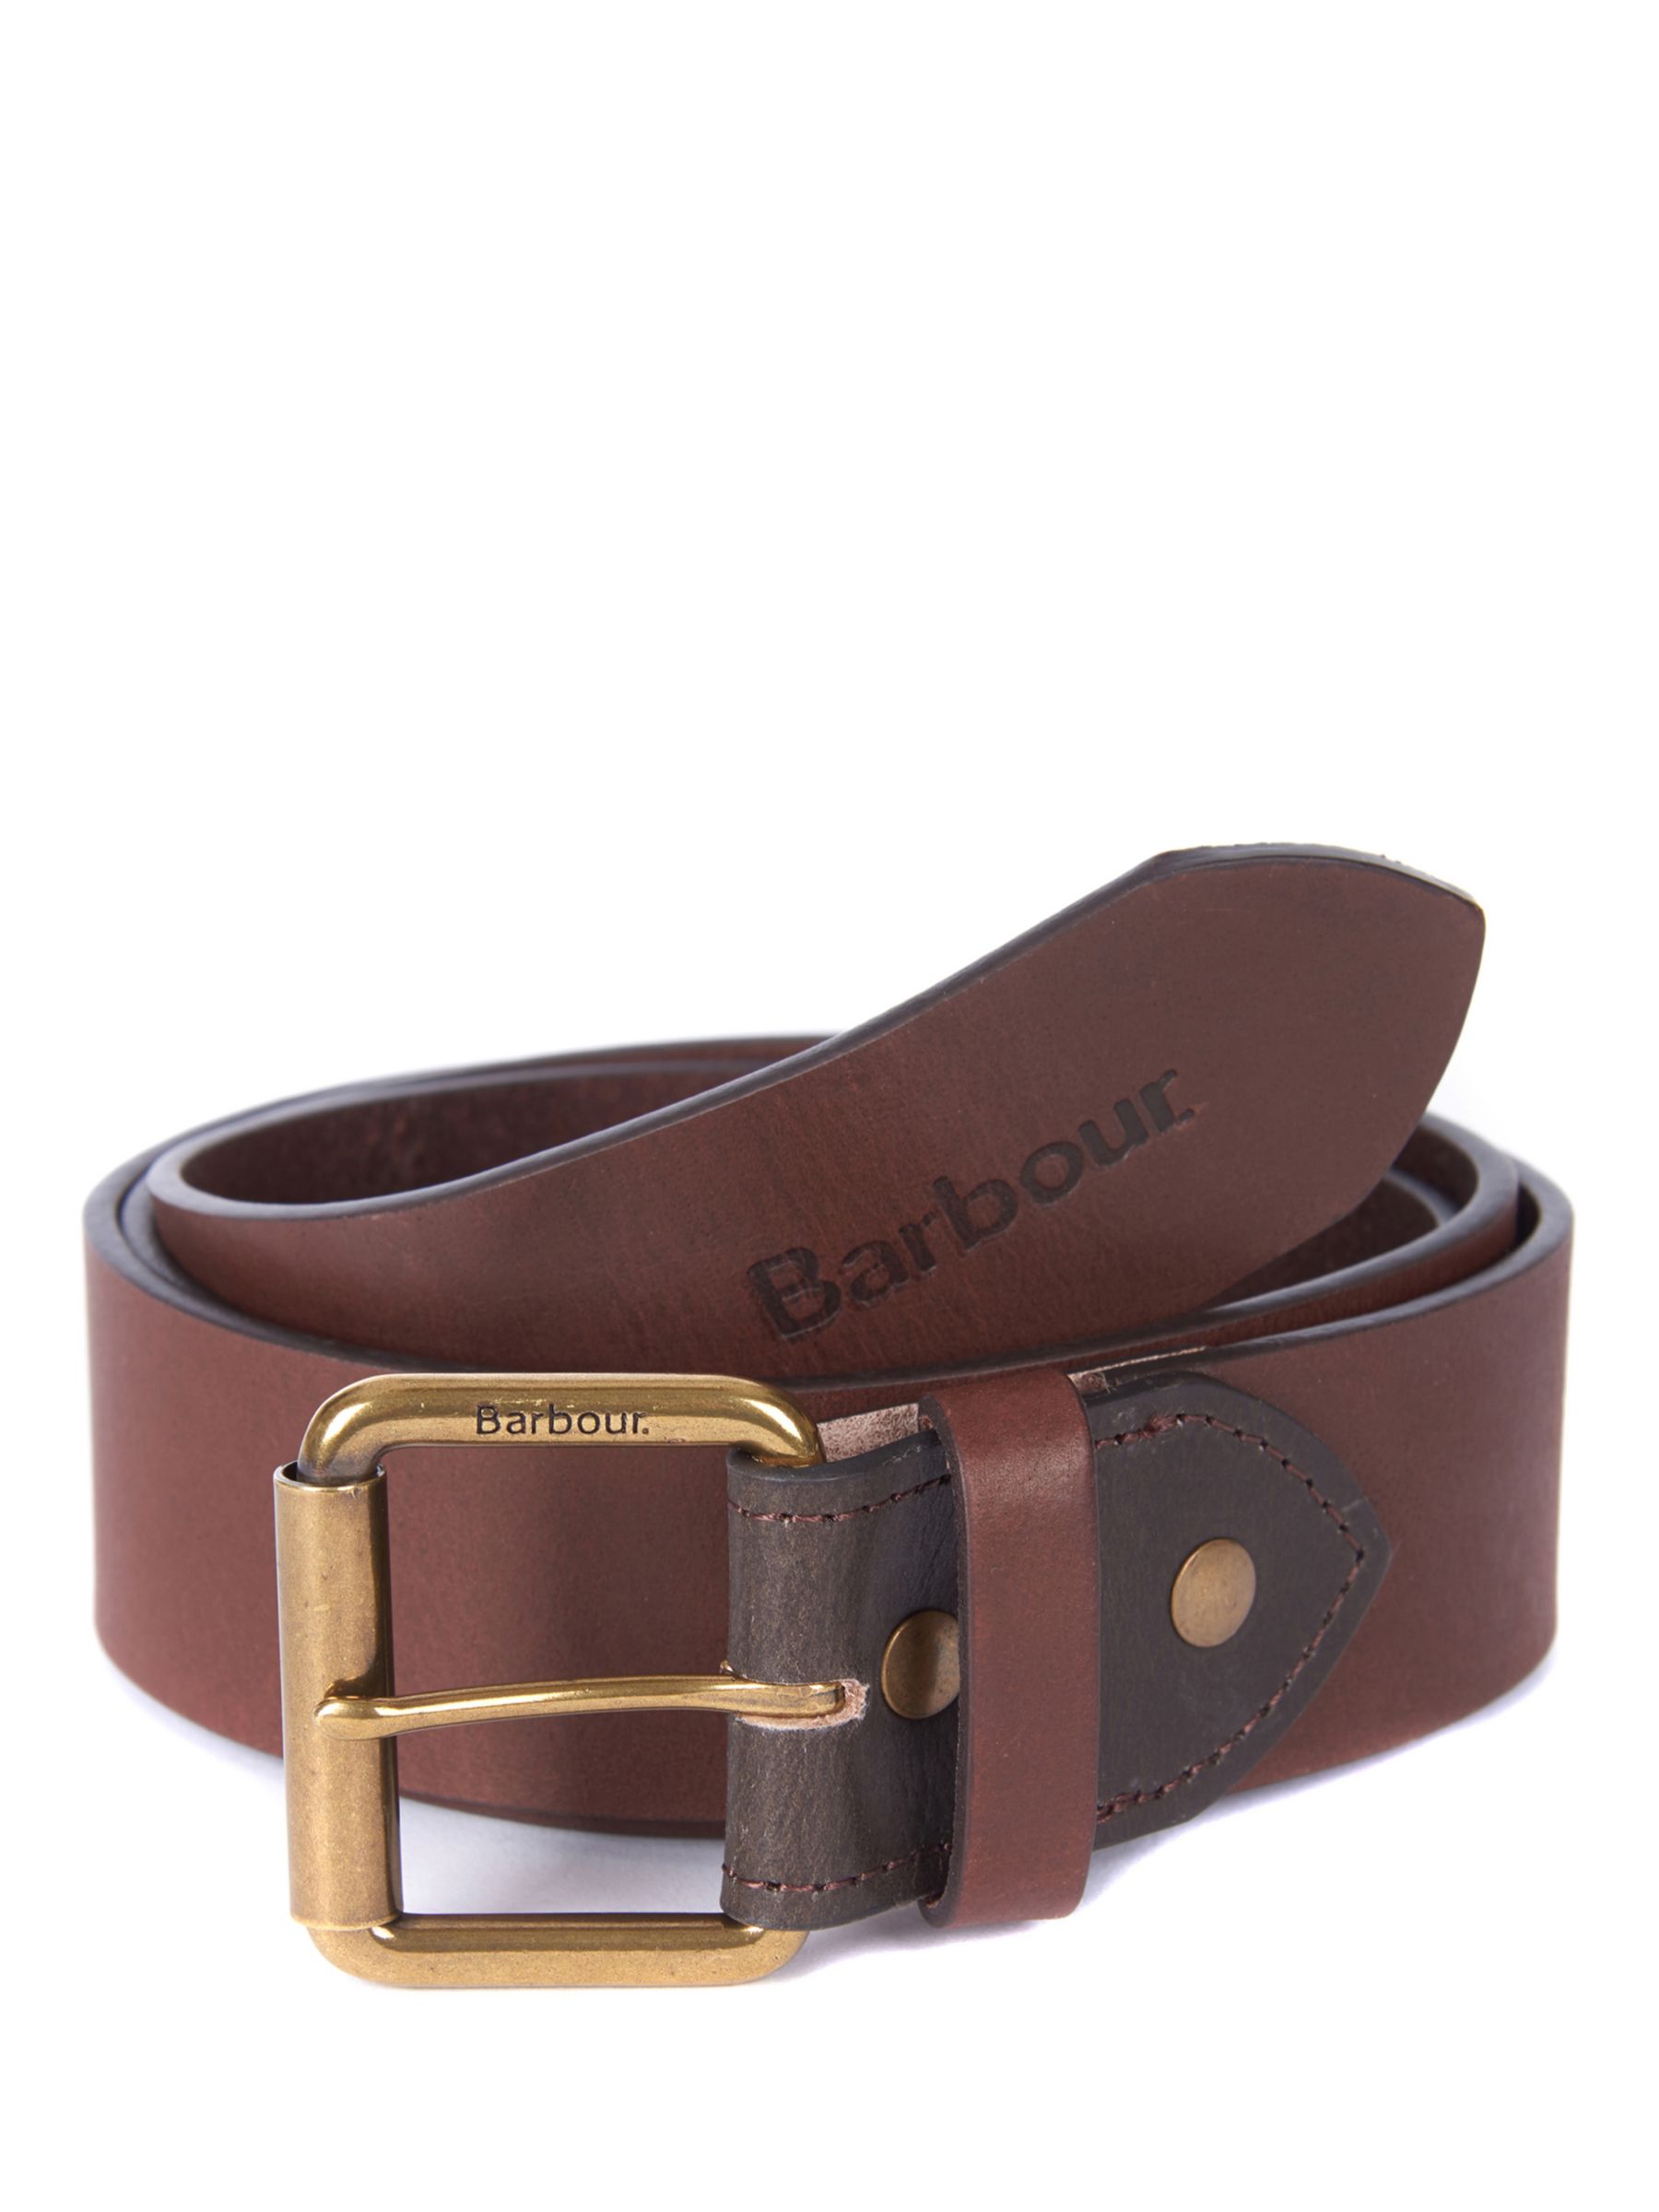 Buy Barbour Contrast Leather Belt, Brown Online at johnlewis.com